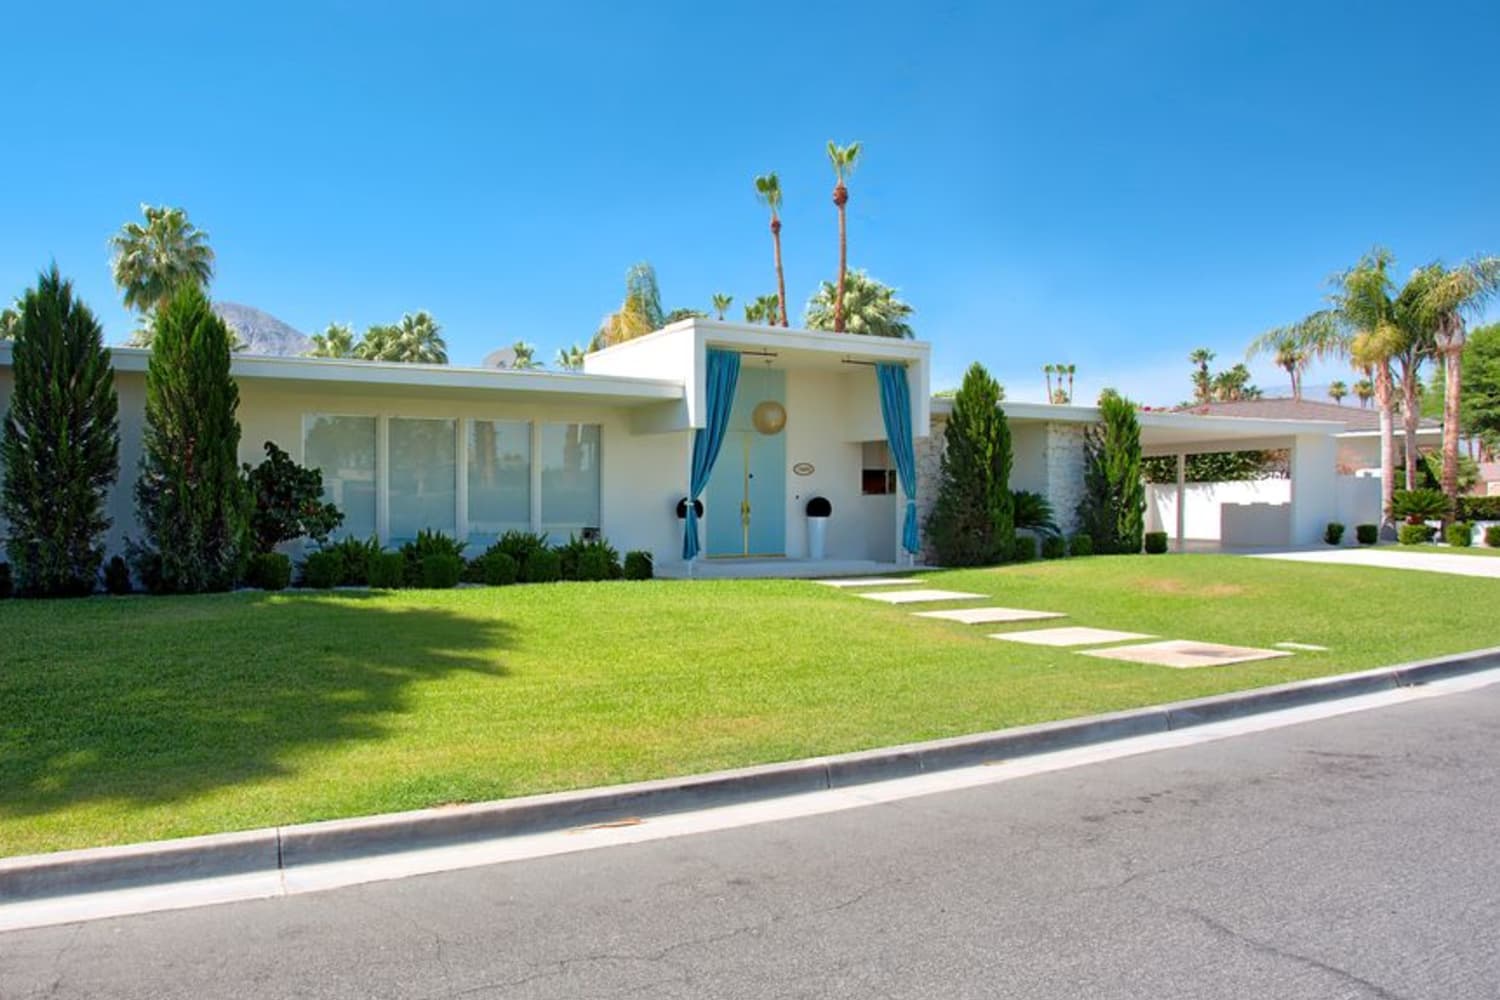 U kan Lucille Ball en Desi Arnaz se huis in Kalifornië huur vir $ 500 per nag